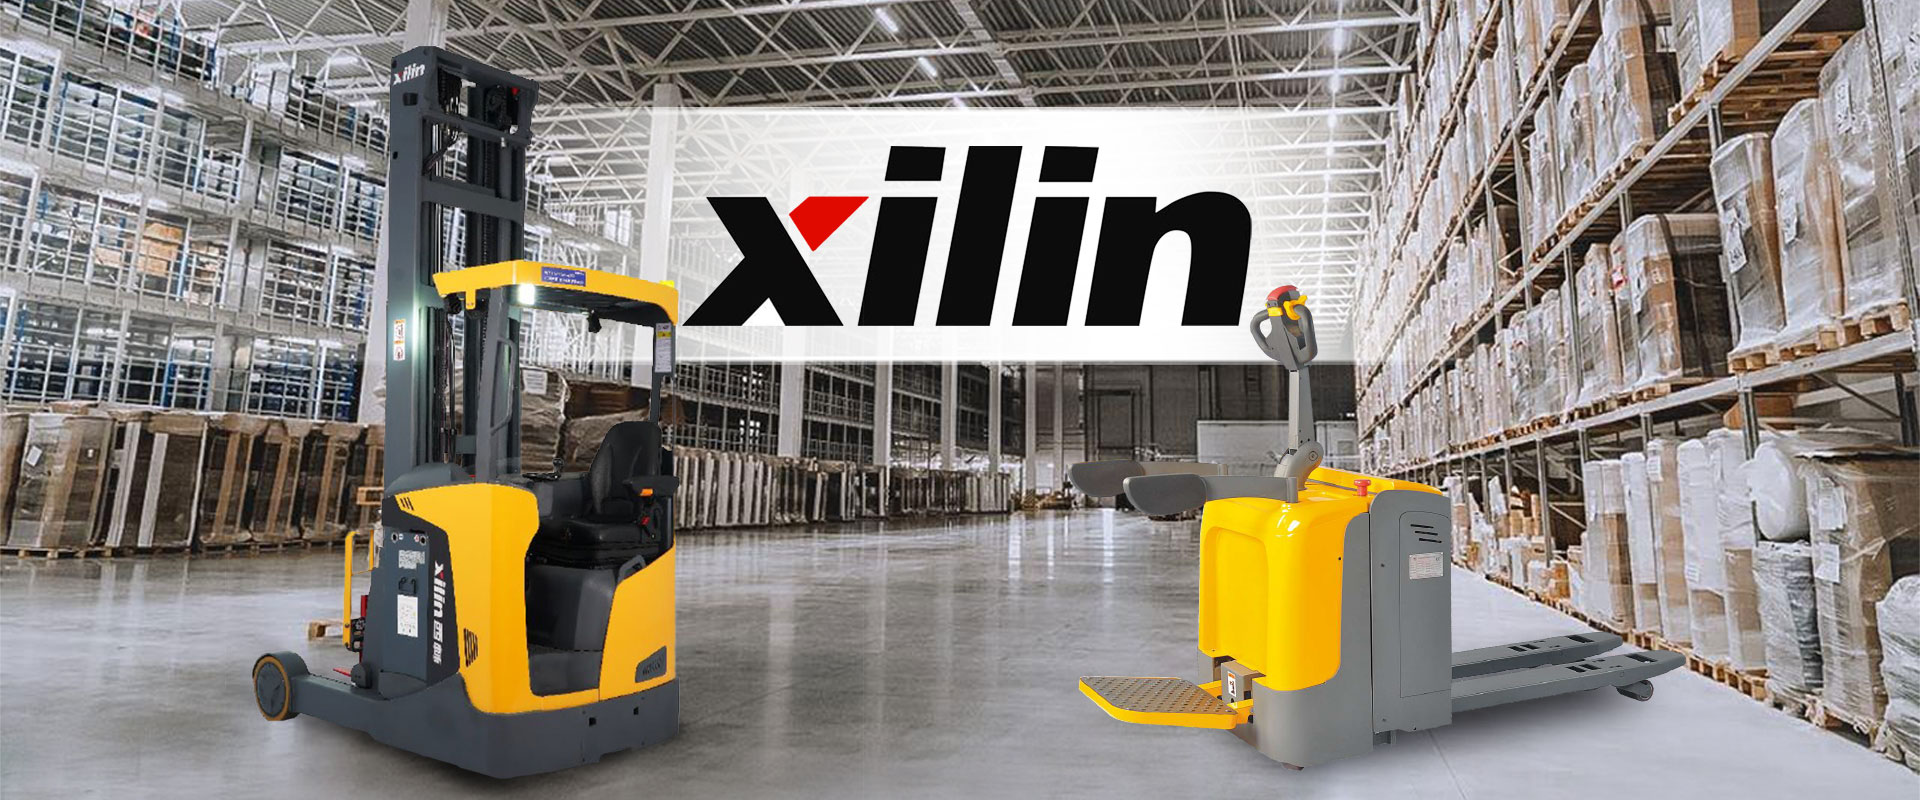 «Инстройтехком» поставил более 100 единиц техники Xilin ключевому заказчику